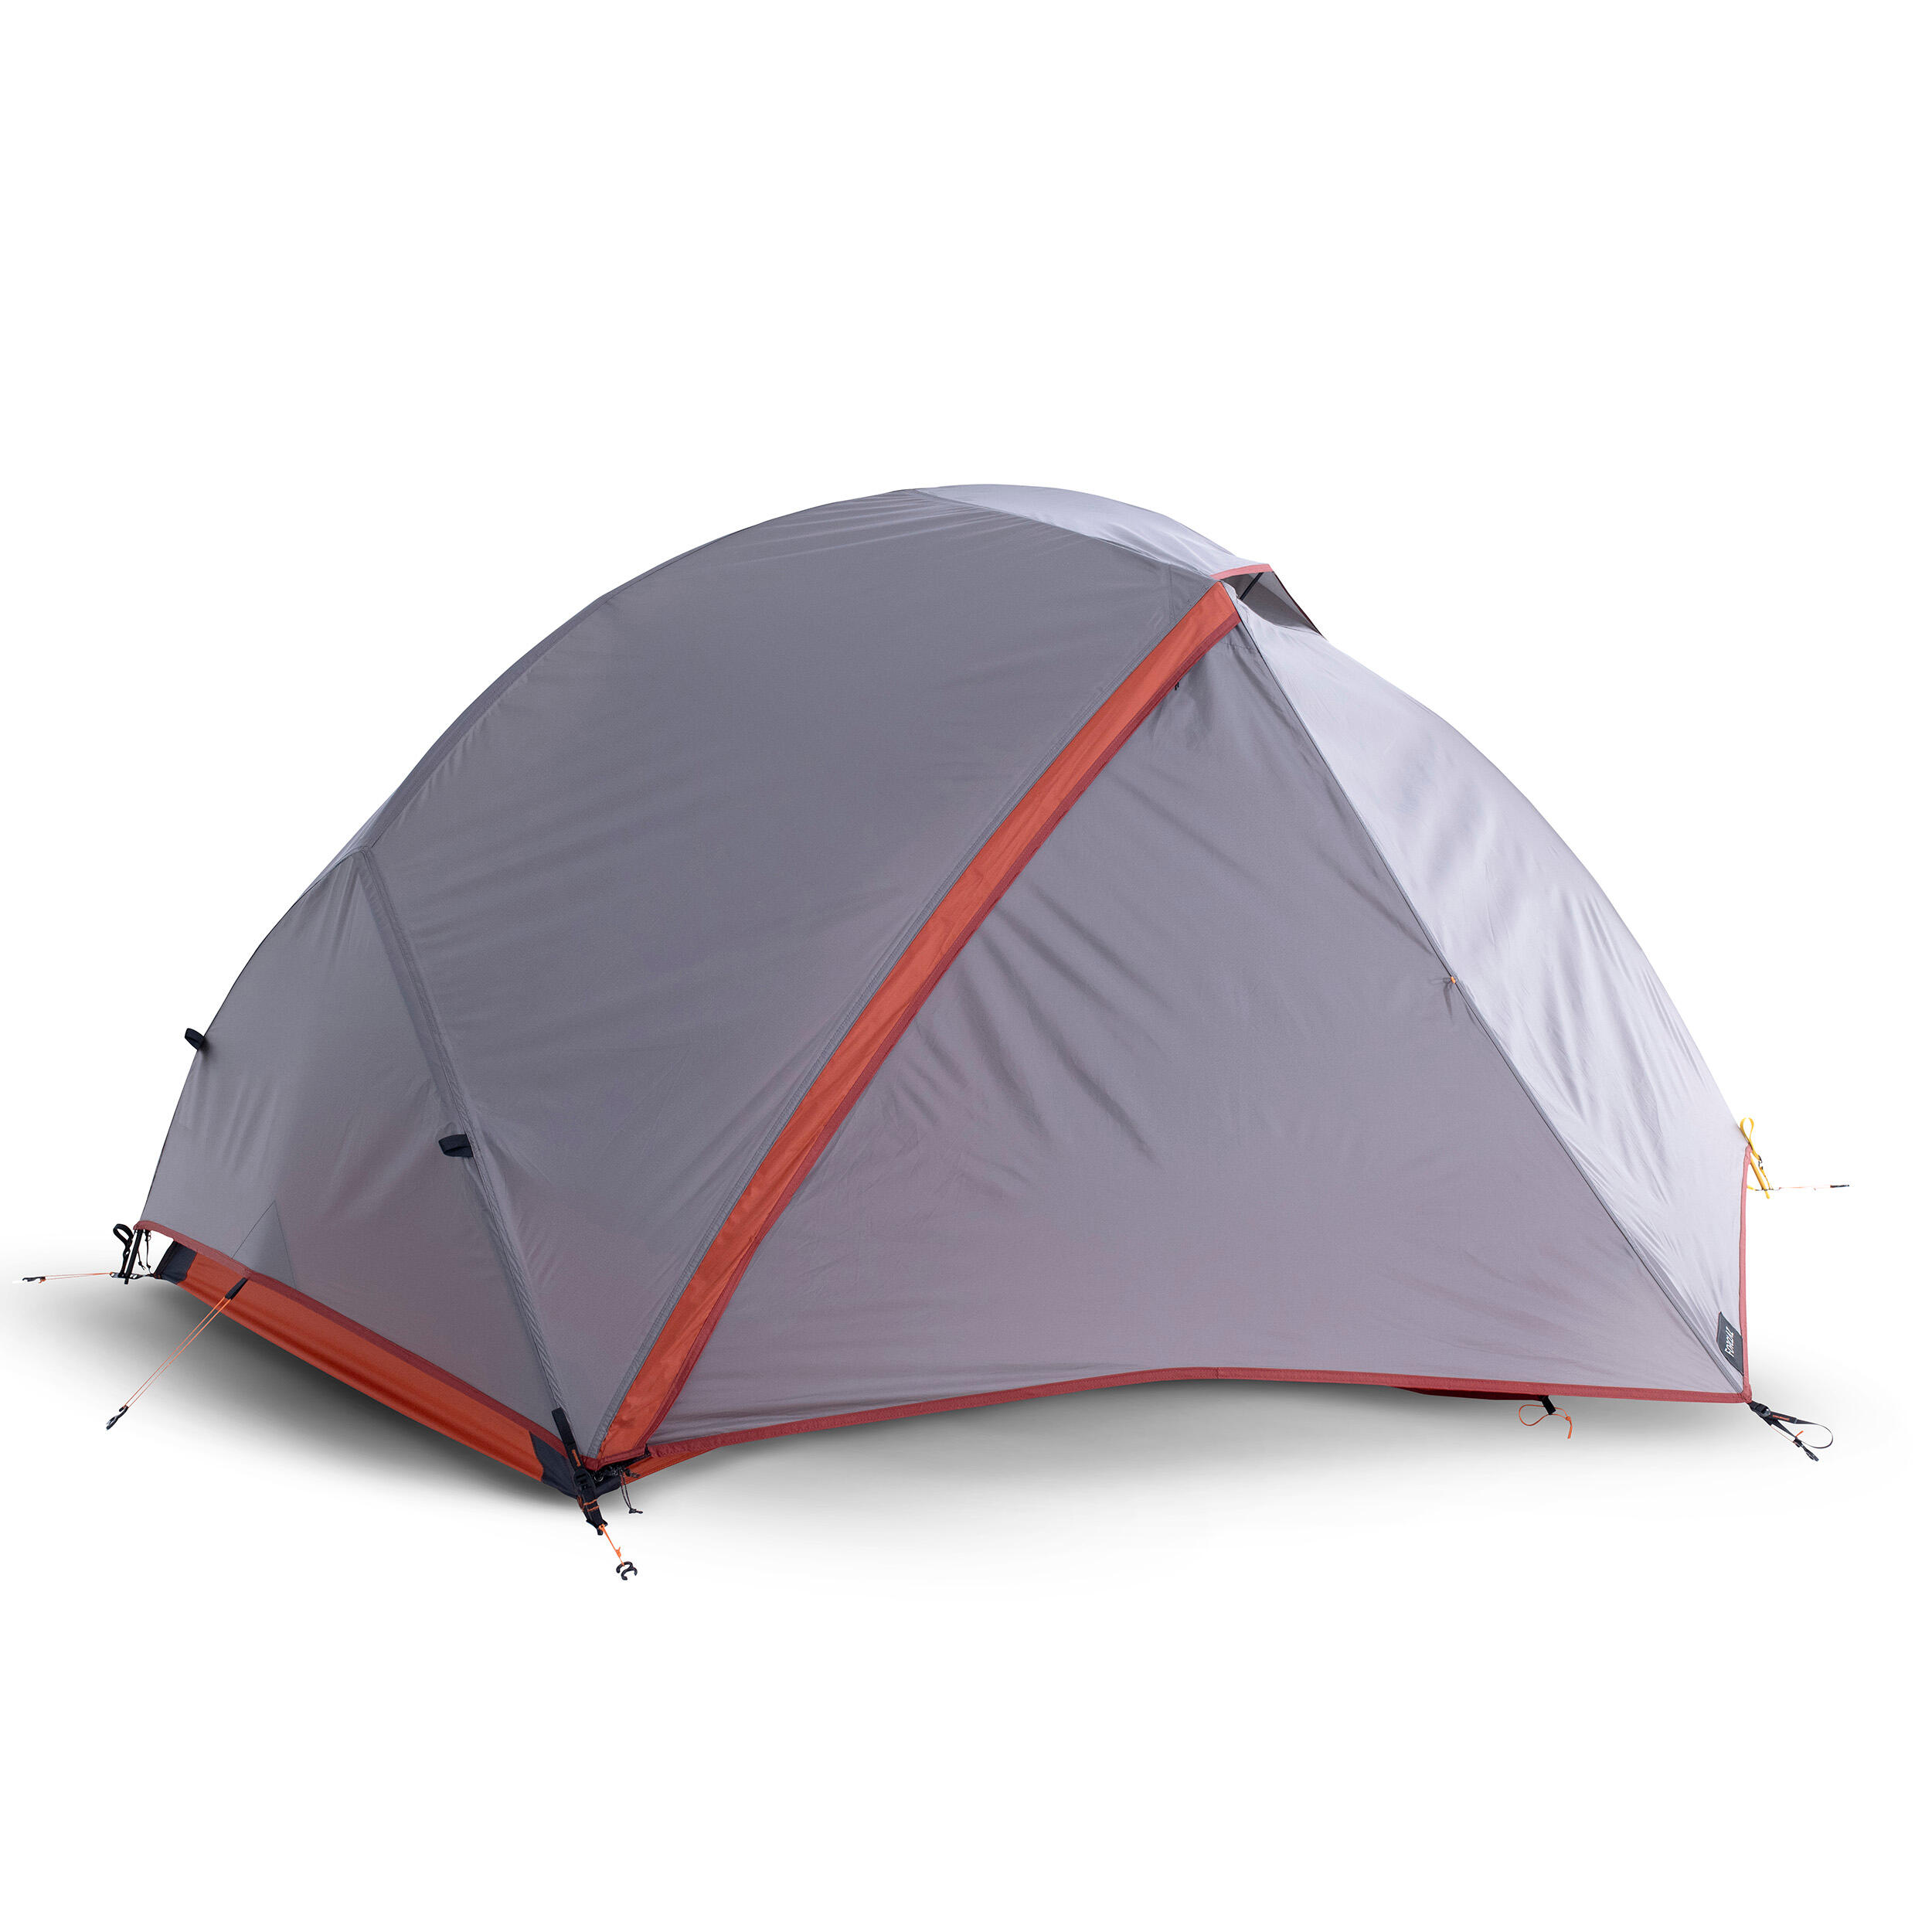 decathlon 5 man tent